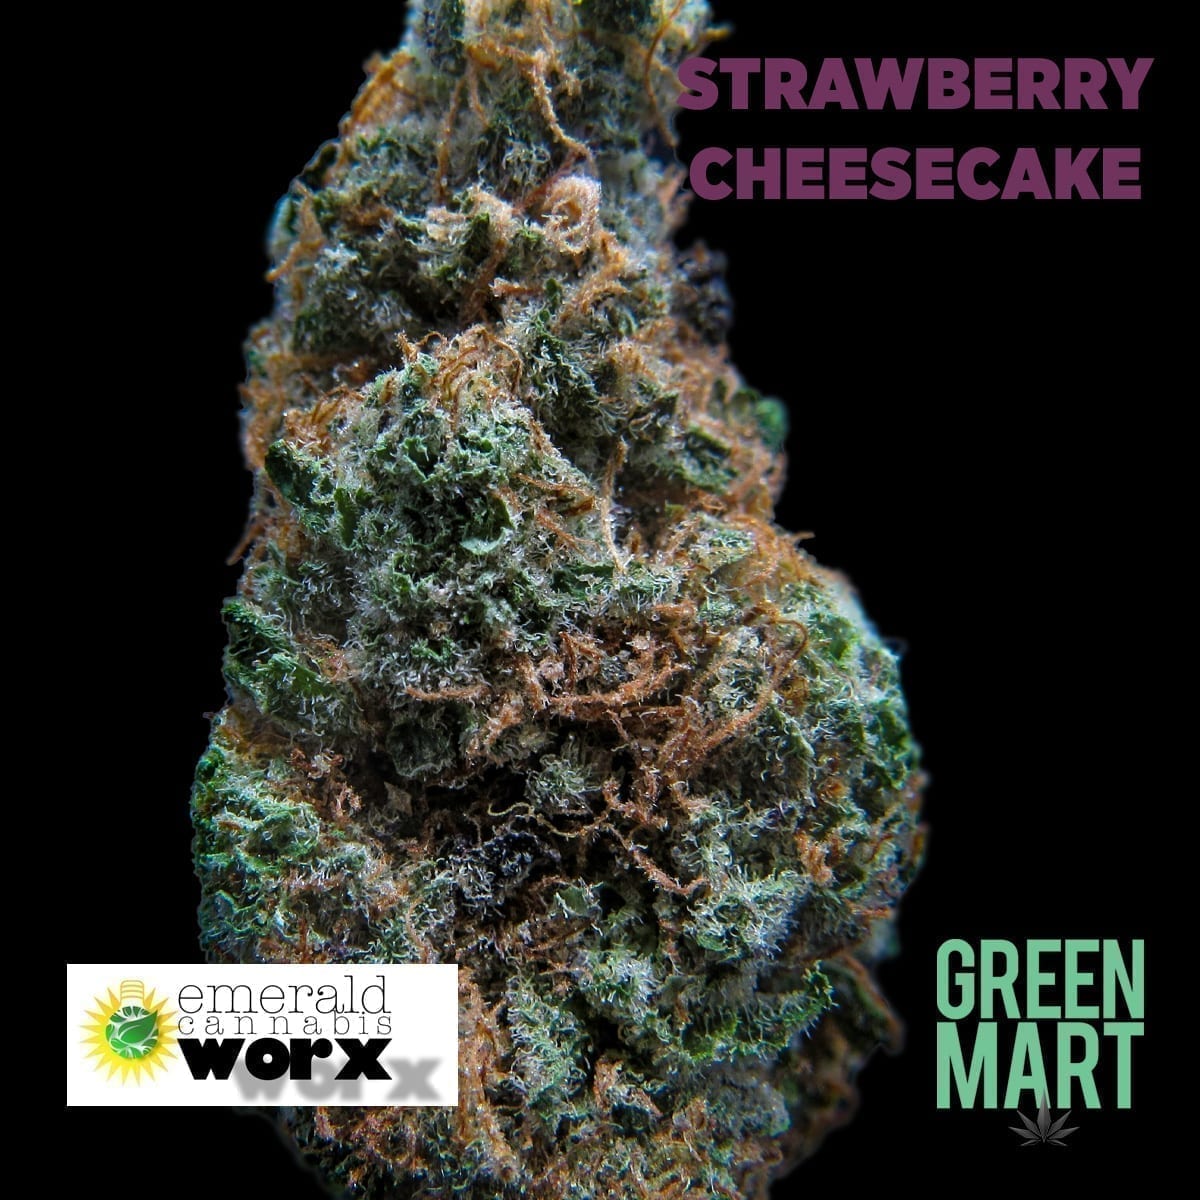 Strawberry Cheesecake by Emerald Cannabis Worx